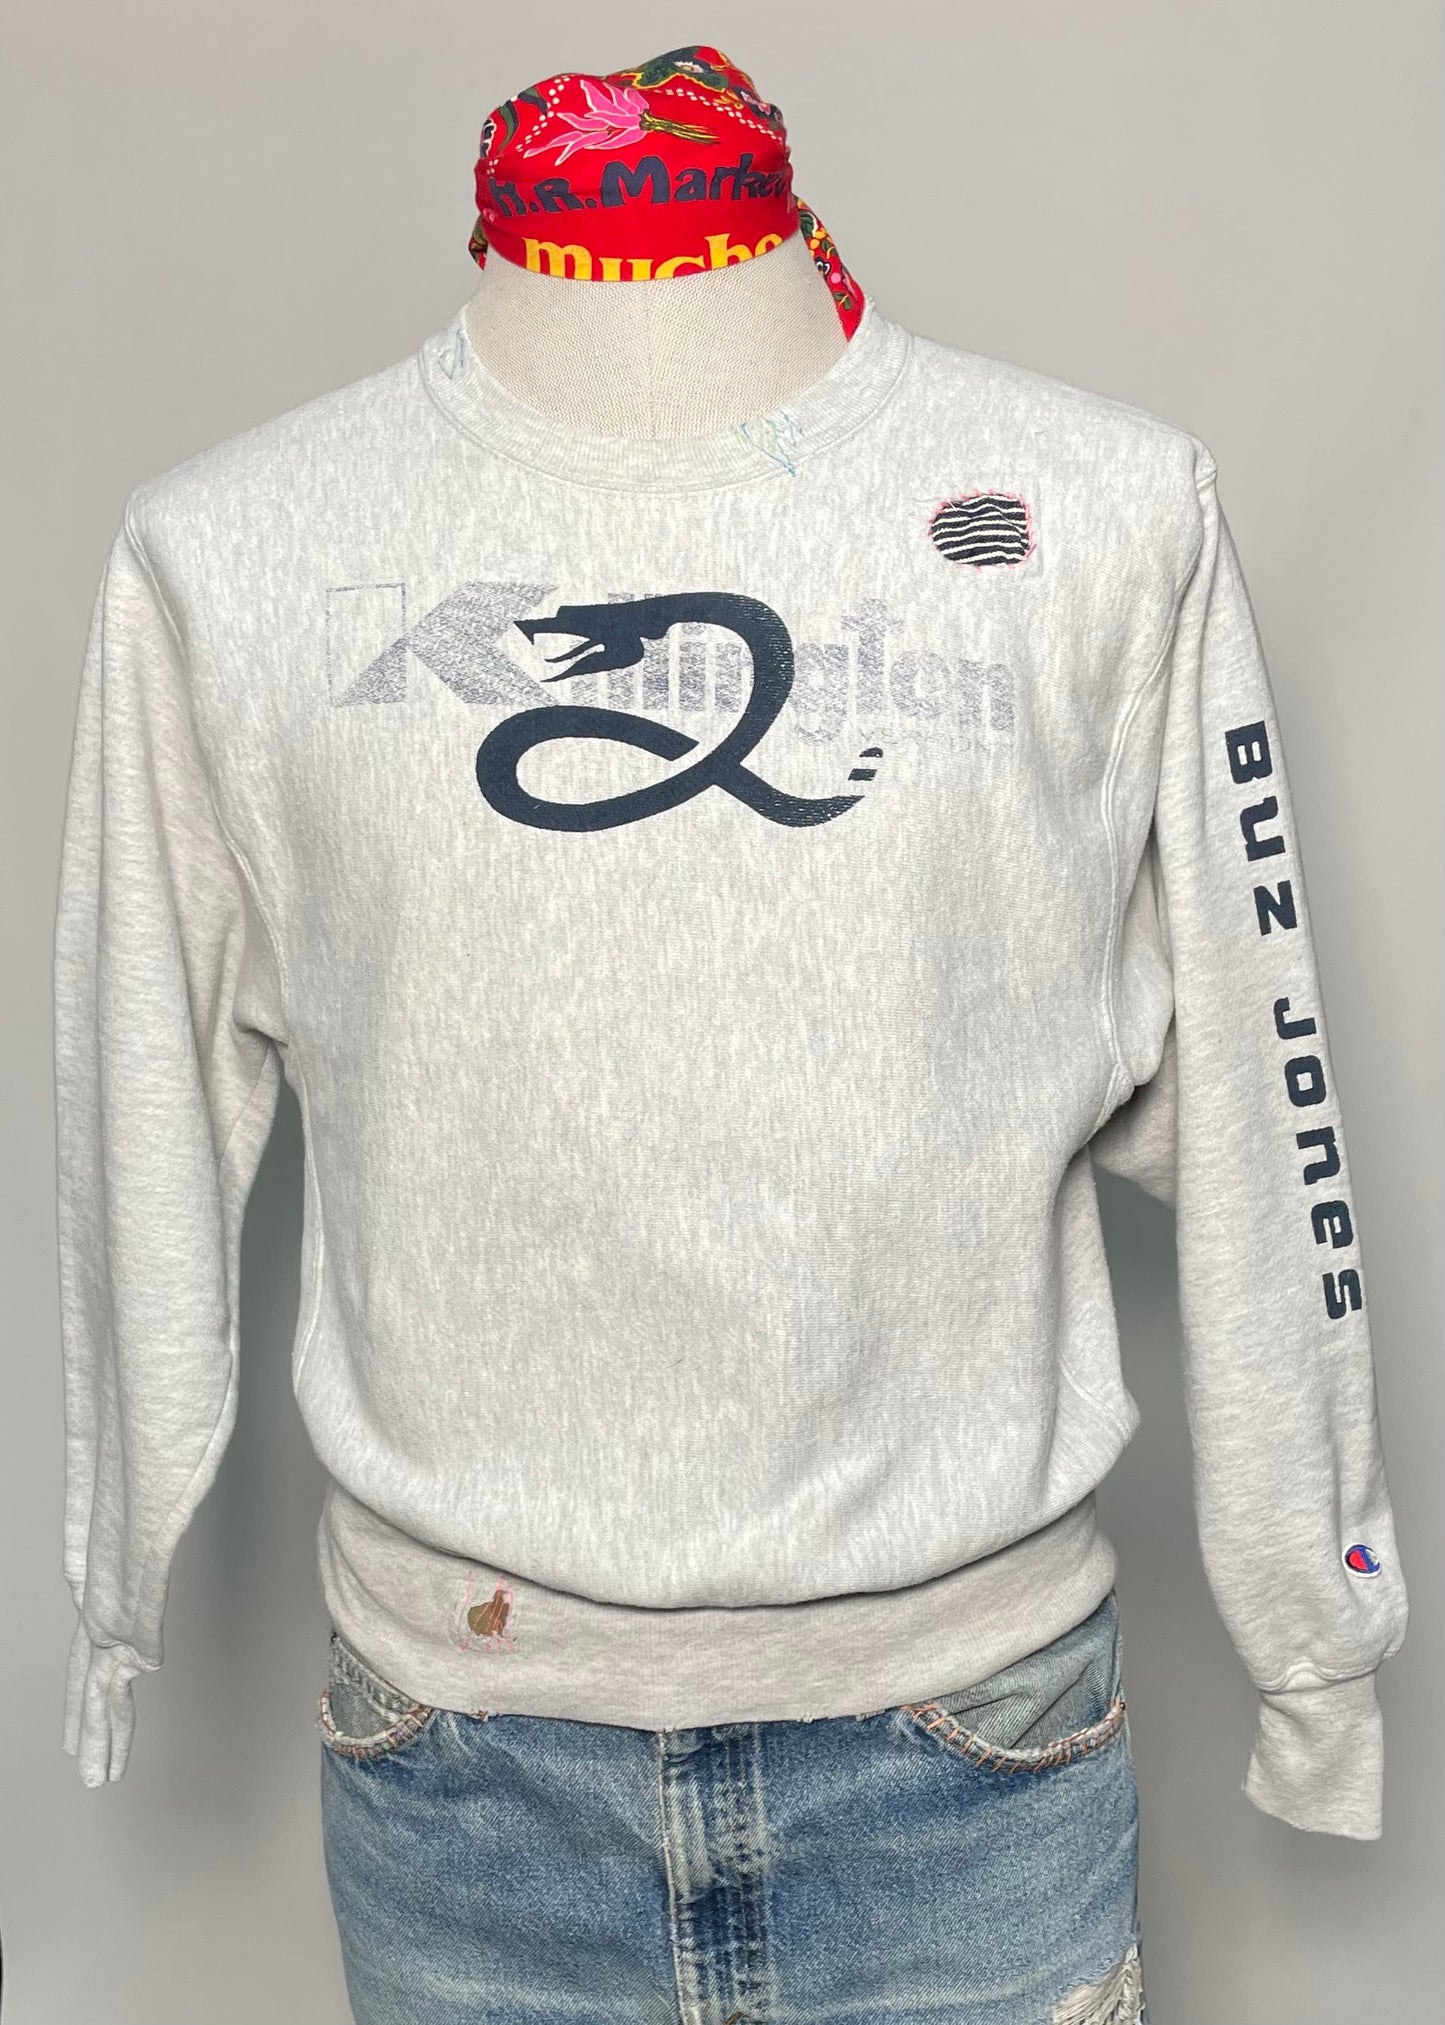 1990s 100% Cotton Champion reverse weave sweatshirt